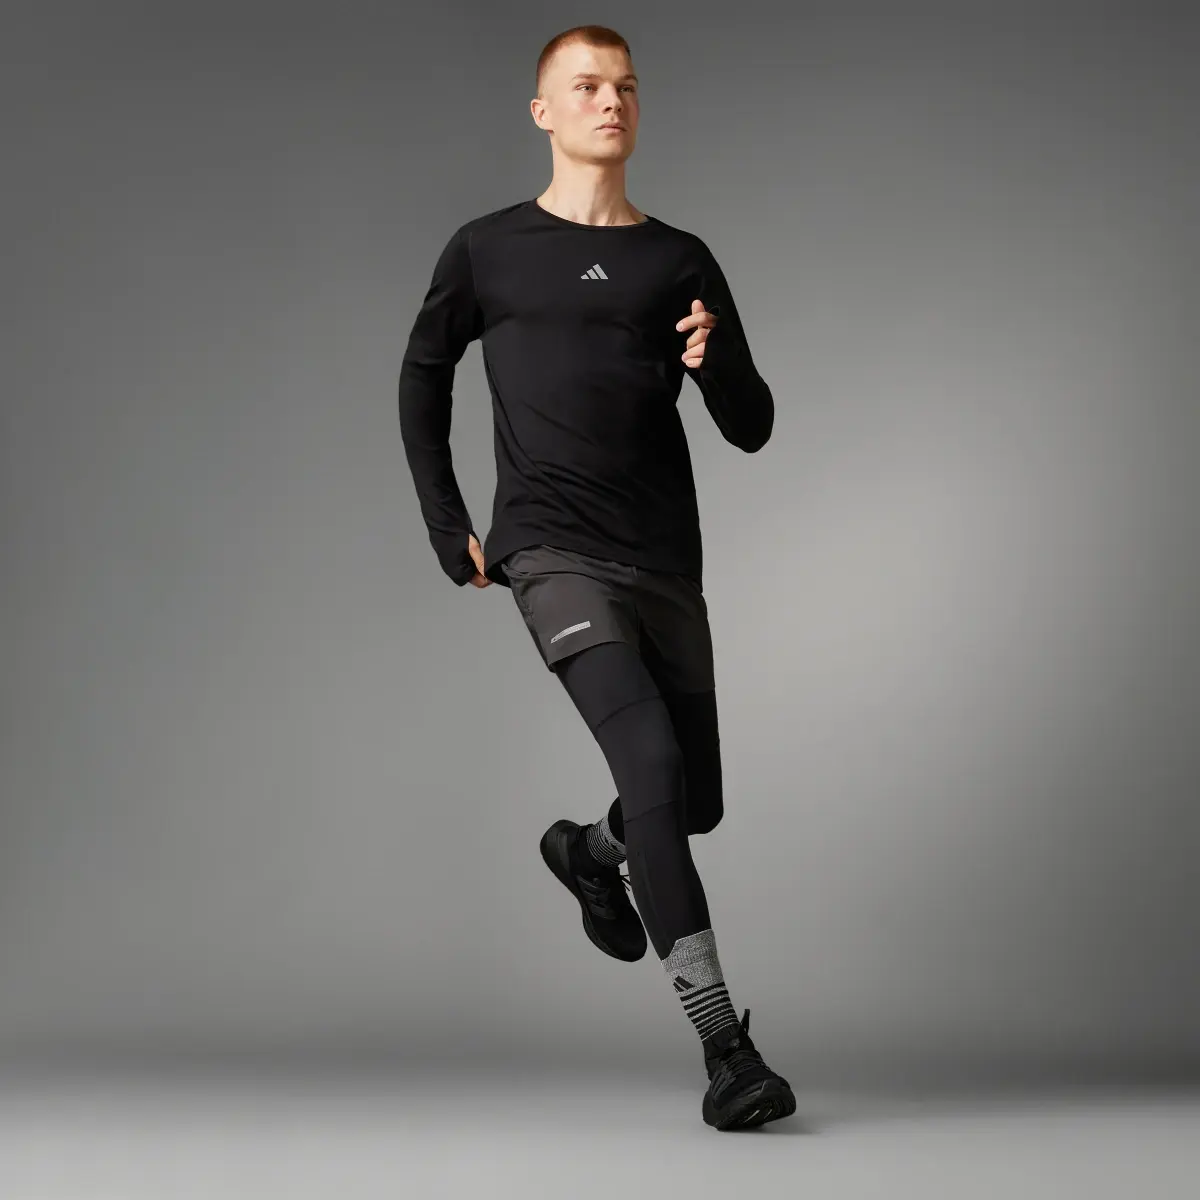 Adidas Koszulka Ultimate Running Conquer the Elements Merino Long Sleeve. 3